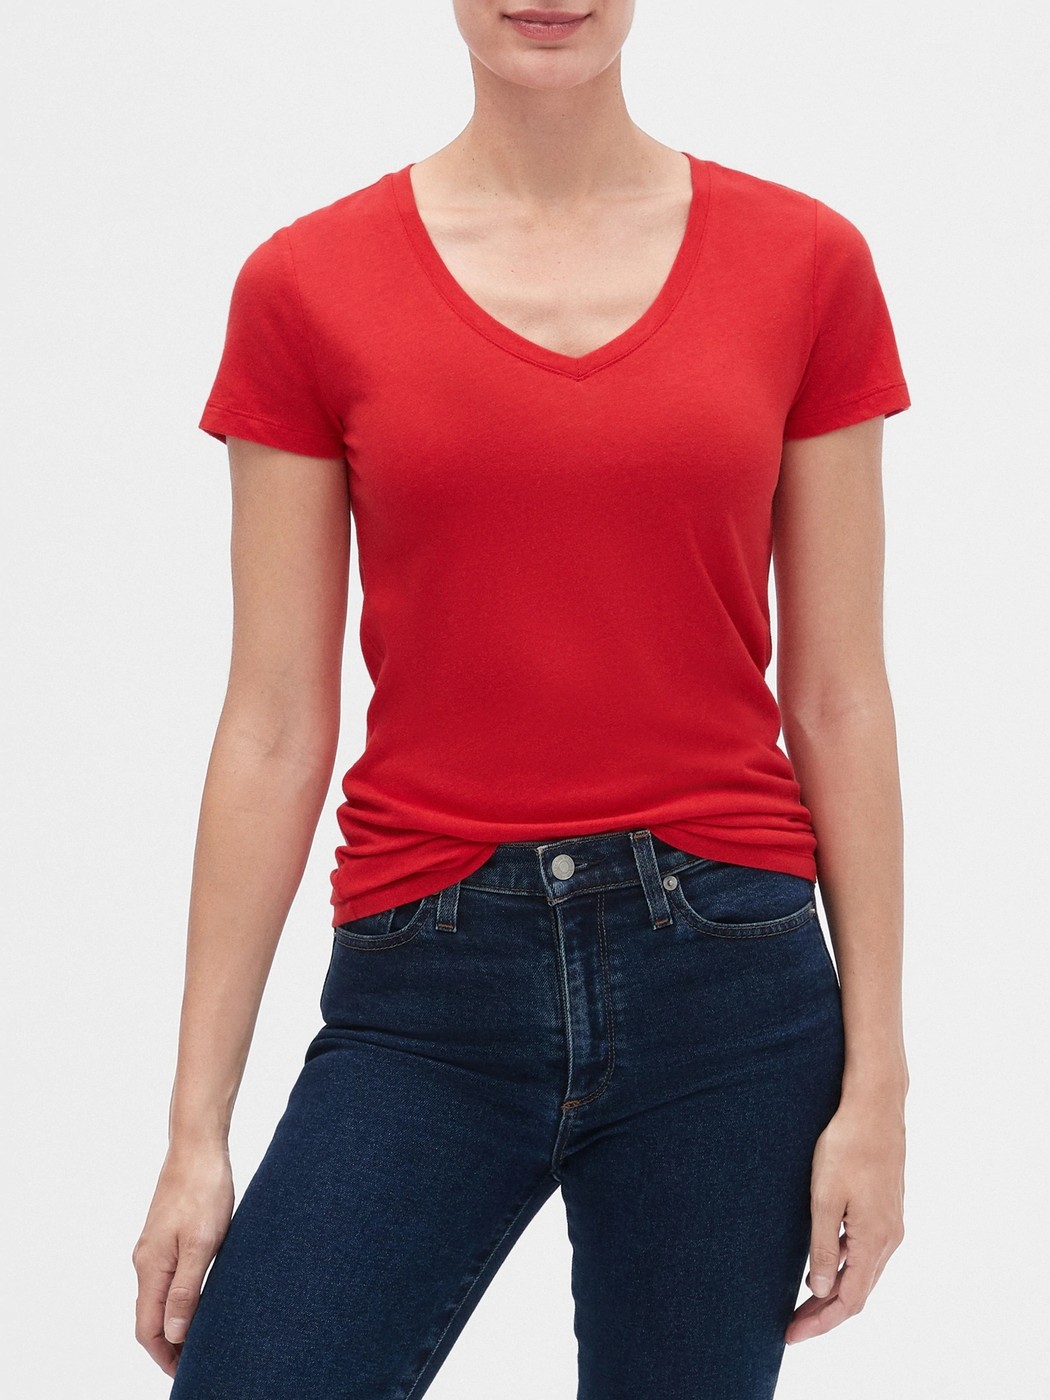 Красная футболка - женская футболка GAP, M, M